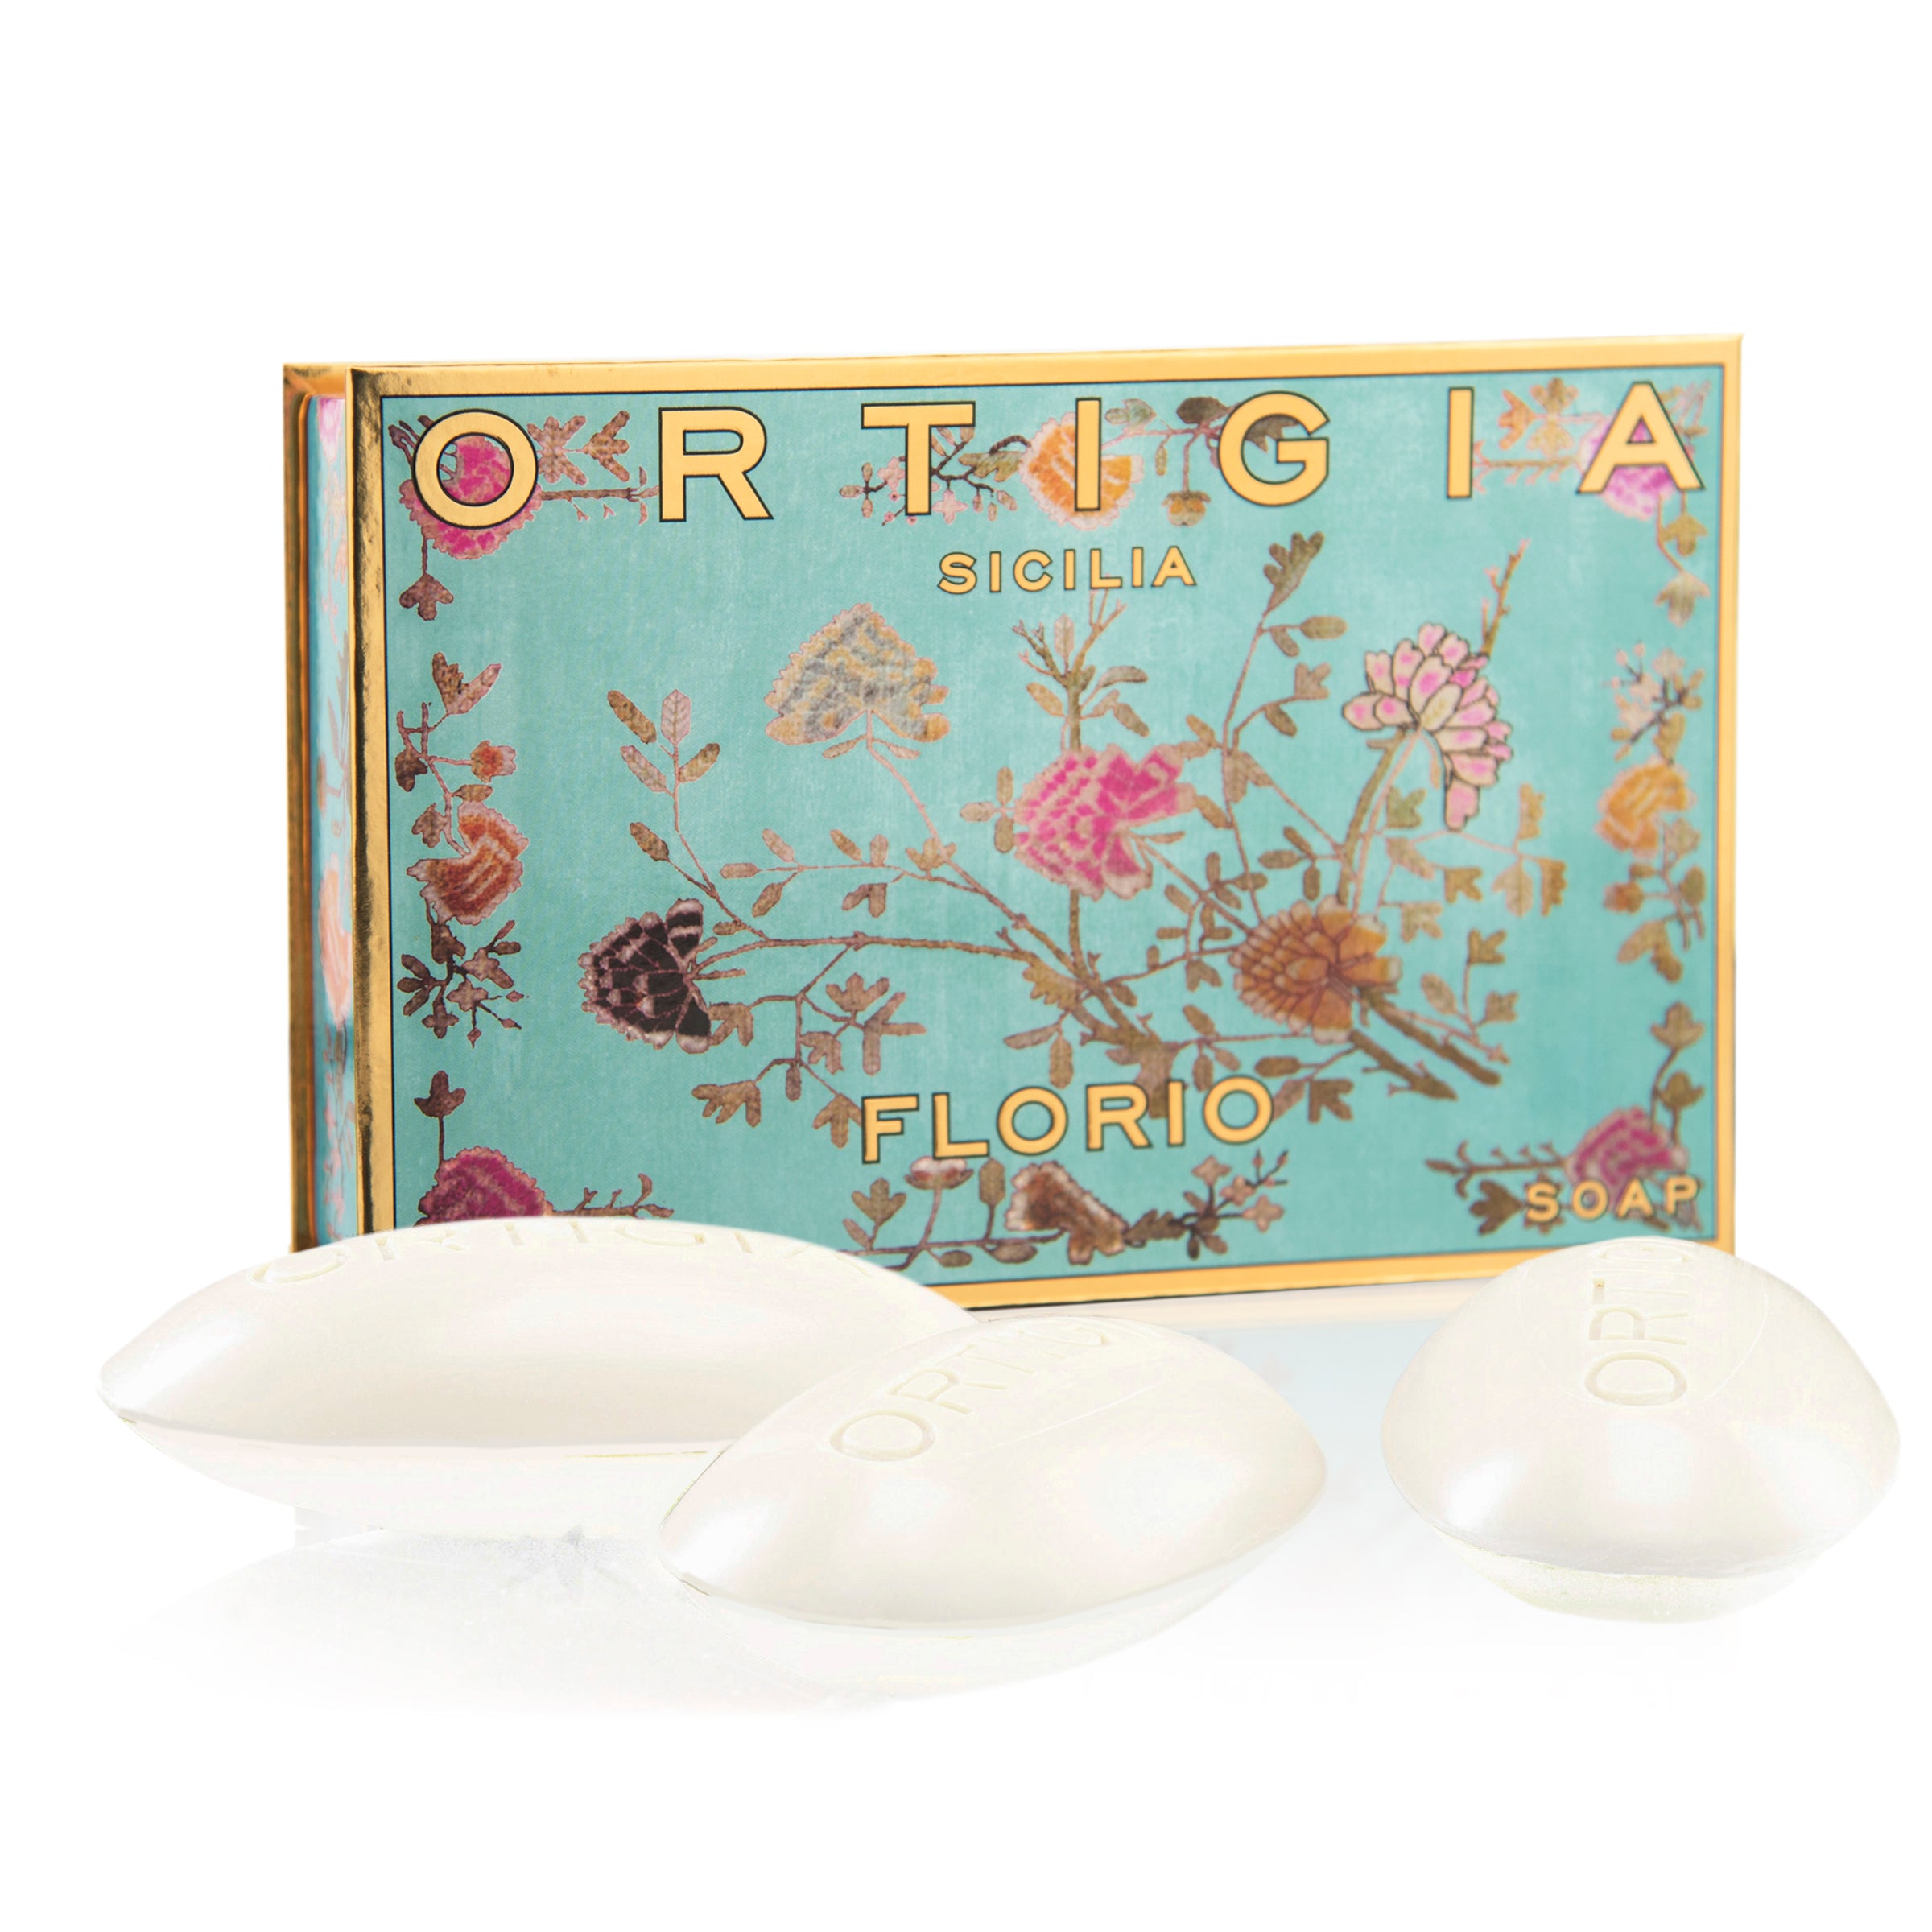 Ortigia Sicilia Florio Soap Set of 3